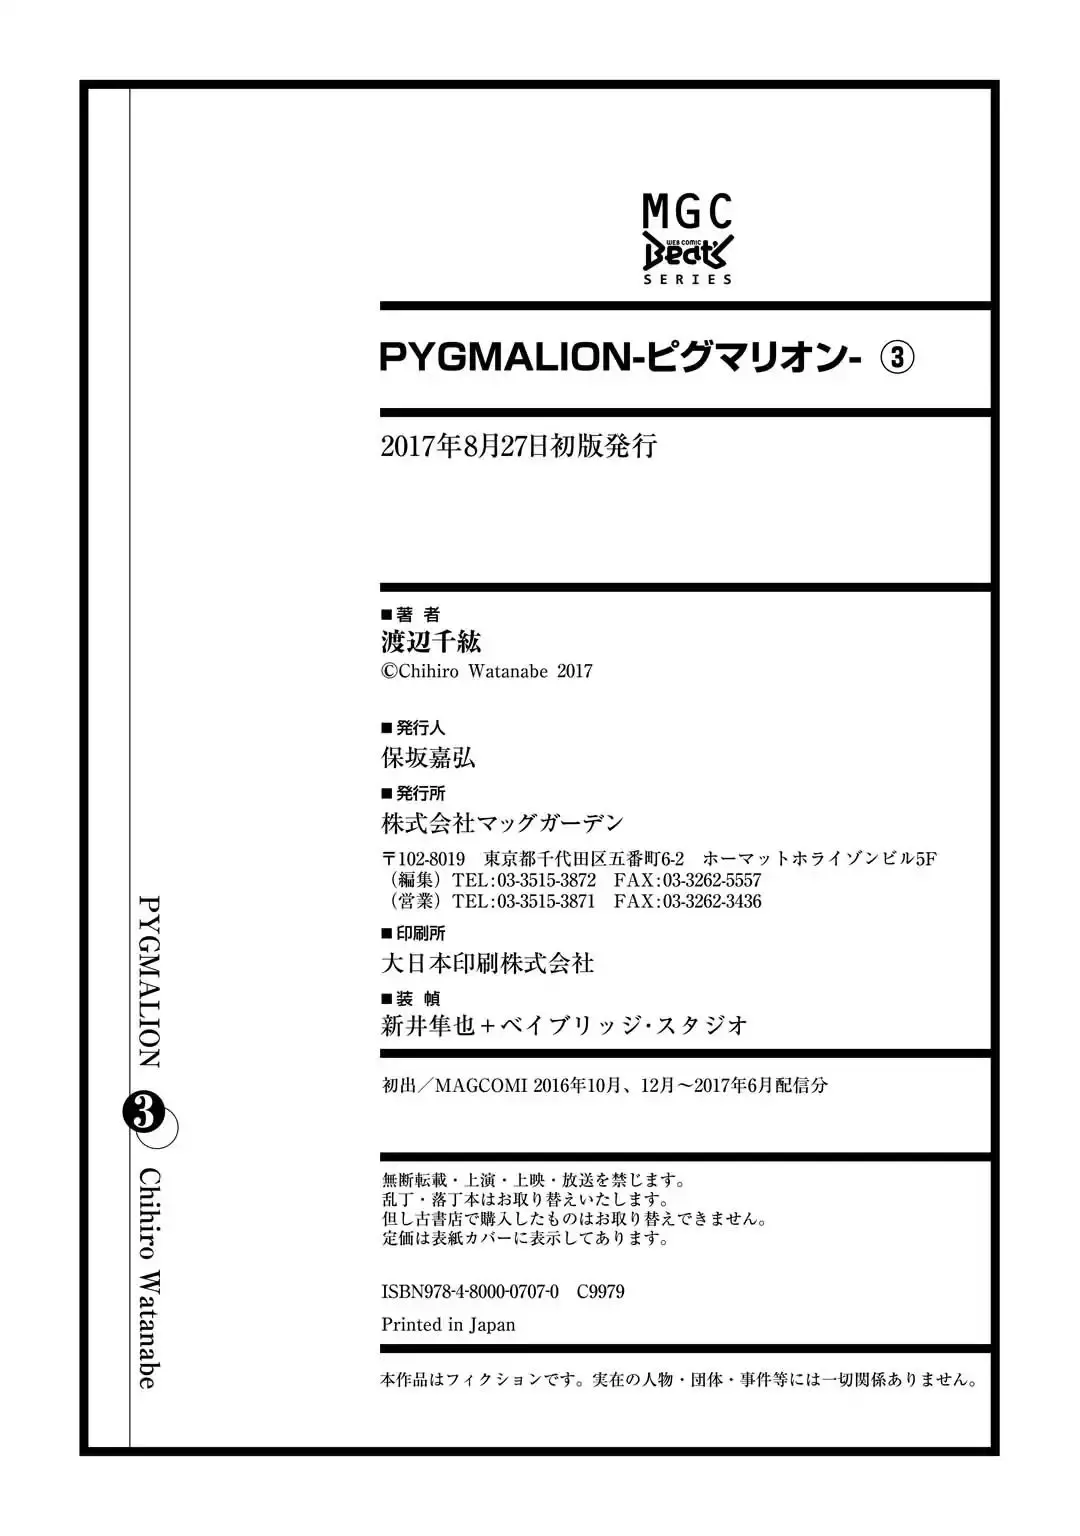 Pygmalion - 19 page 25-7a0dab65